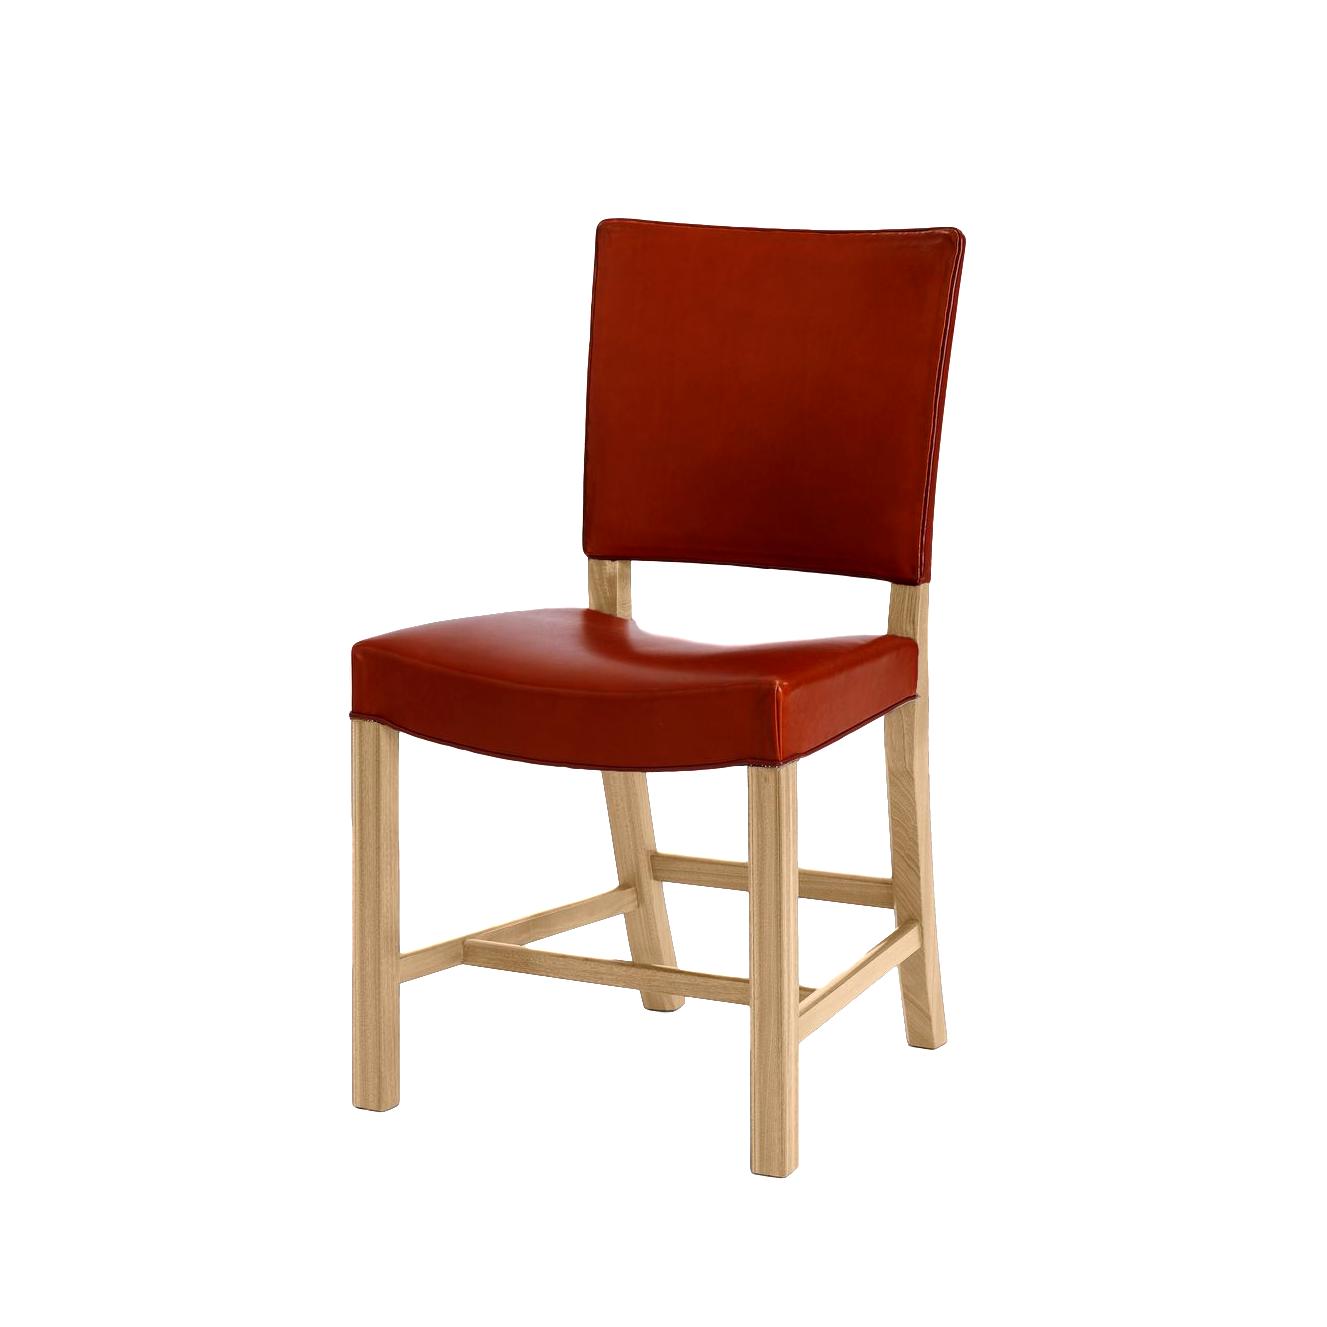 Carl Hansen KK39490 Liten röd stol, ekvålat/svart läder